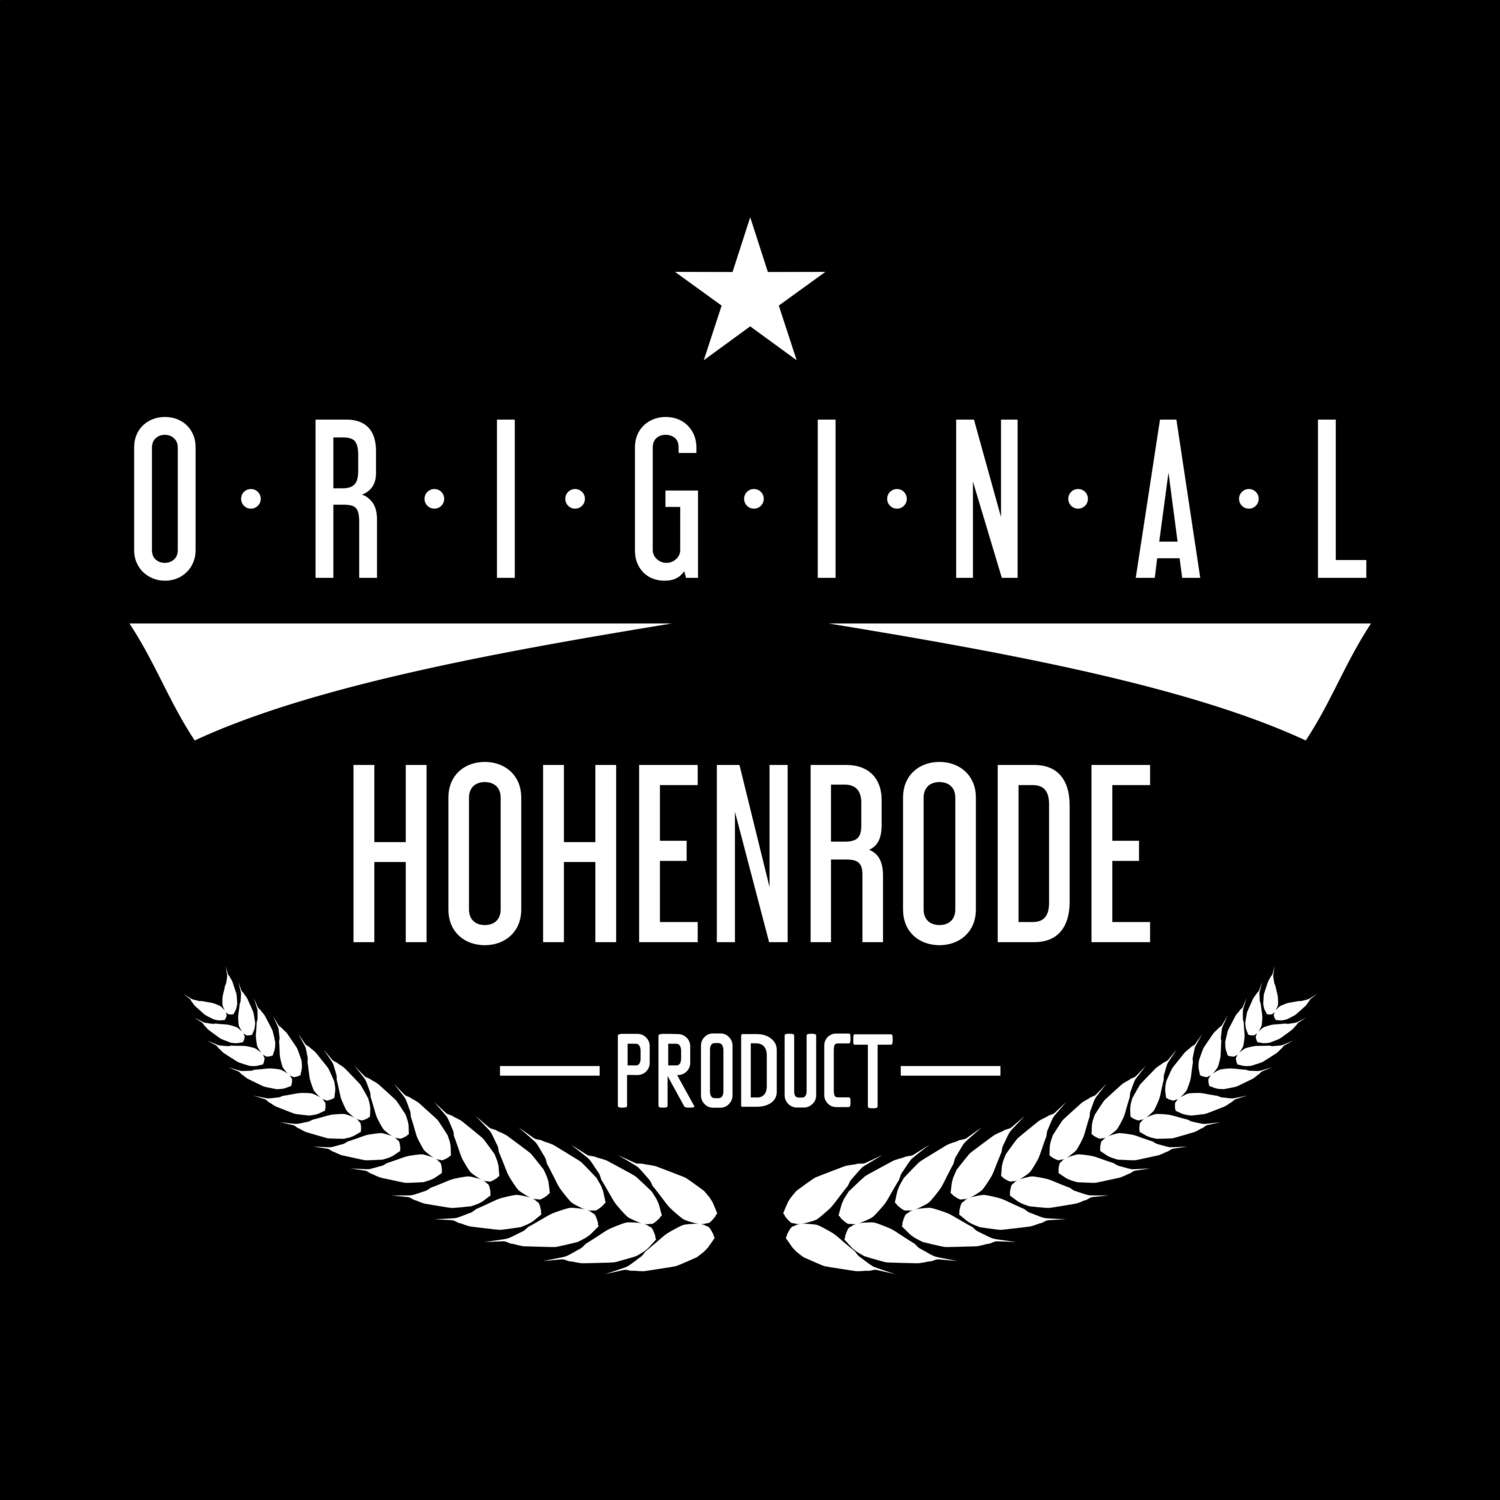 Hohenrode T-Shirt »Original Product«